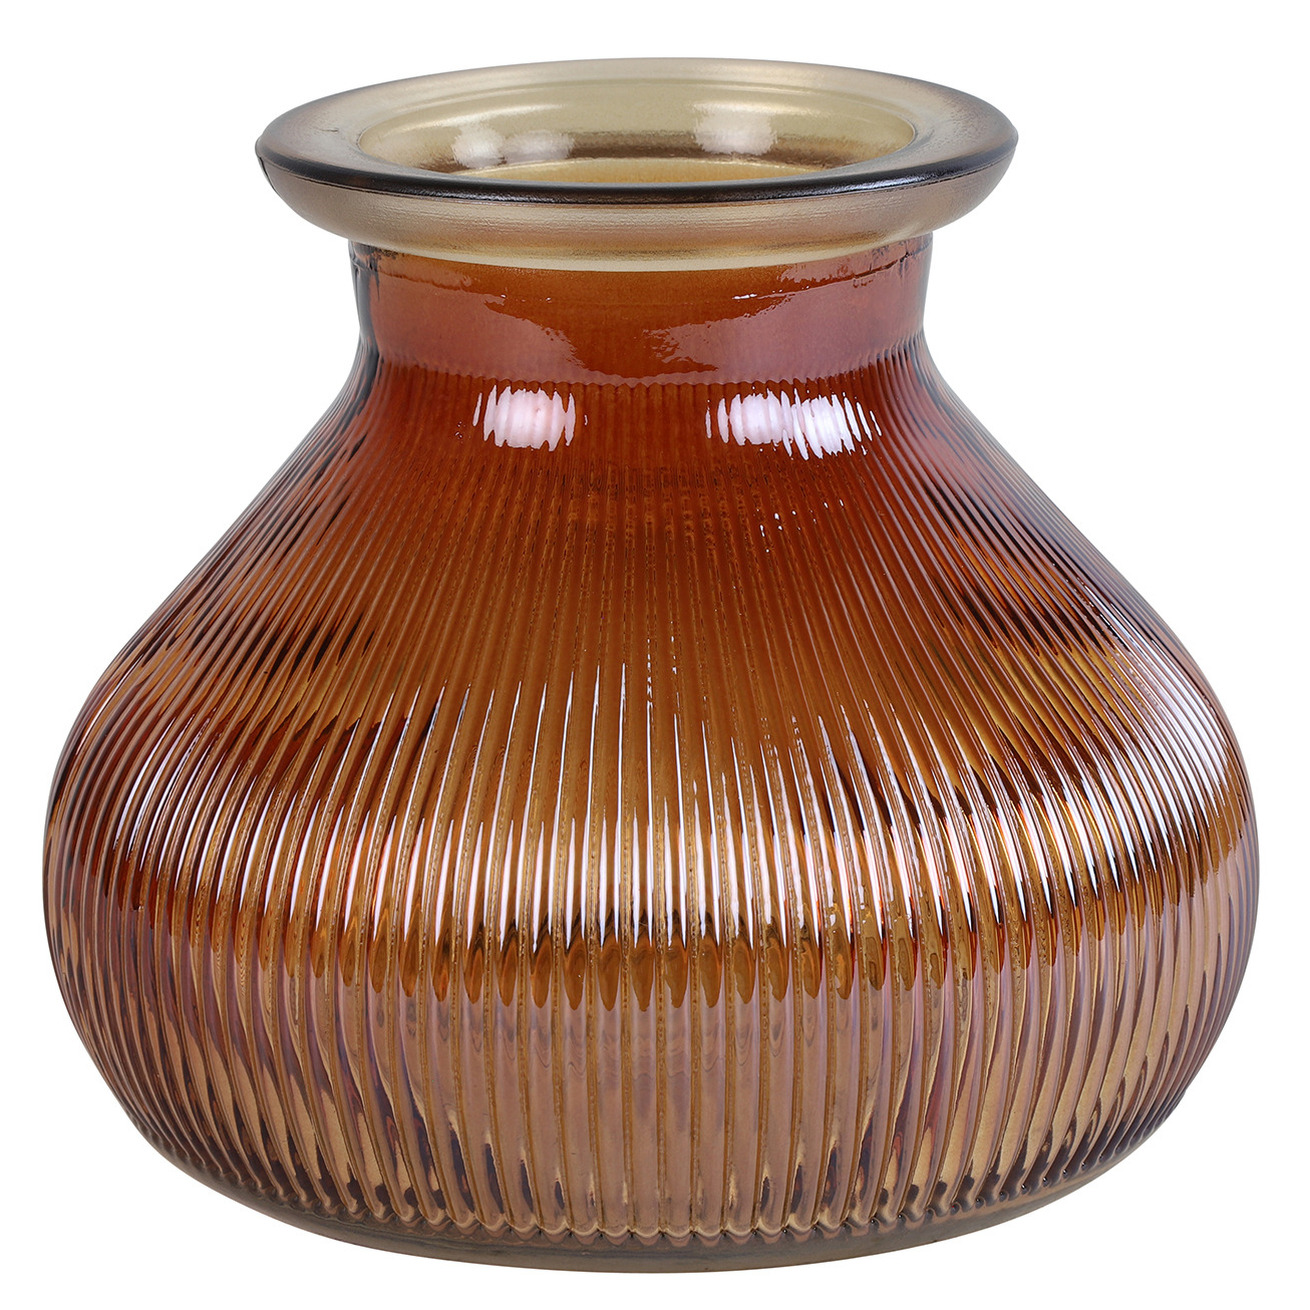 Bloemenvaas kastanje bruin-transparant glas H12 x D15 cm